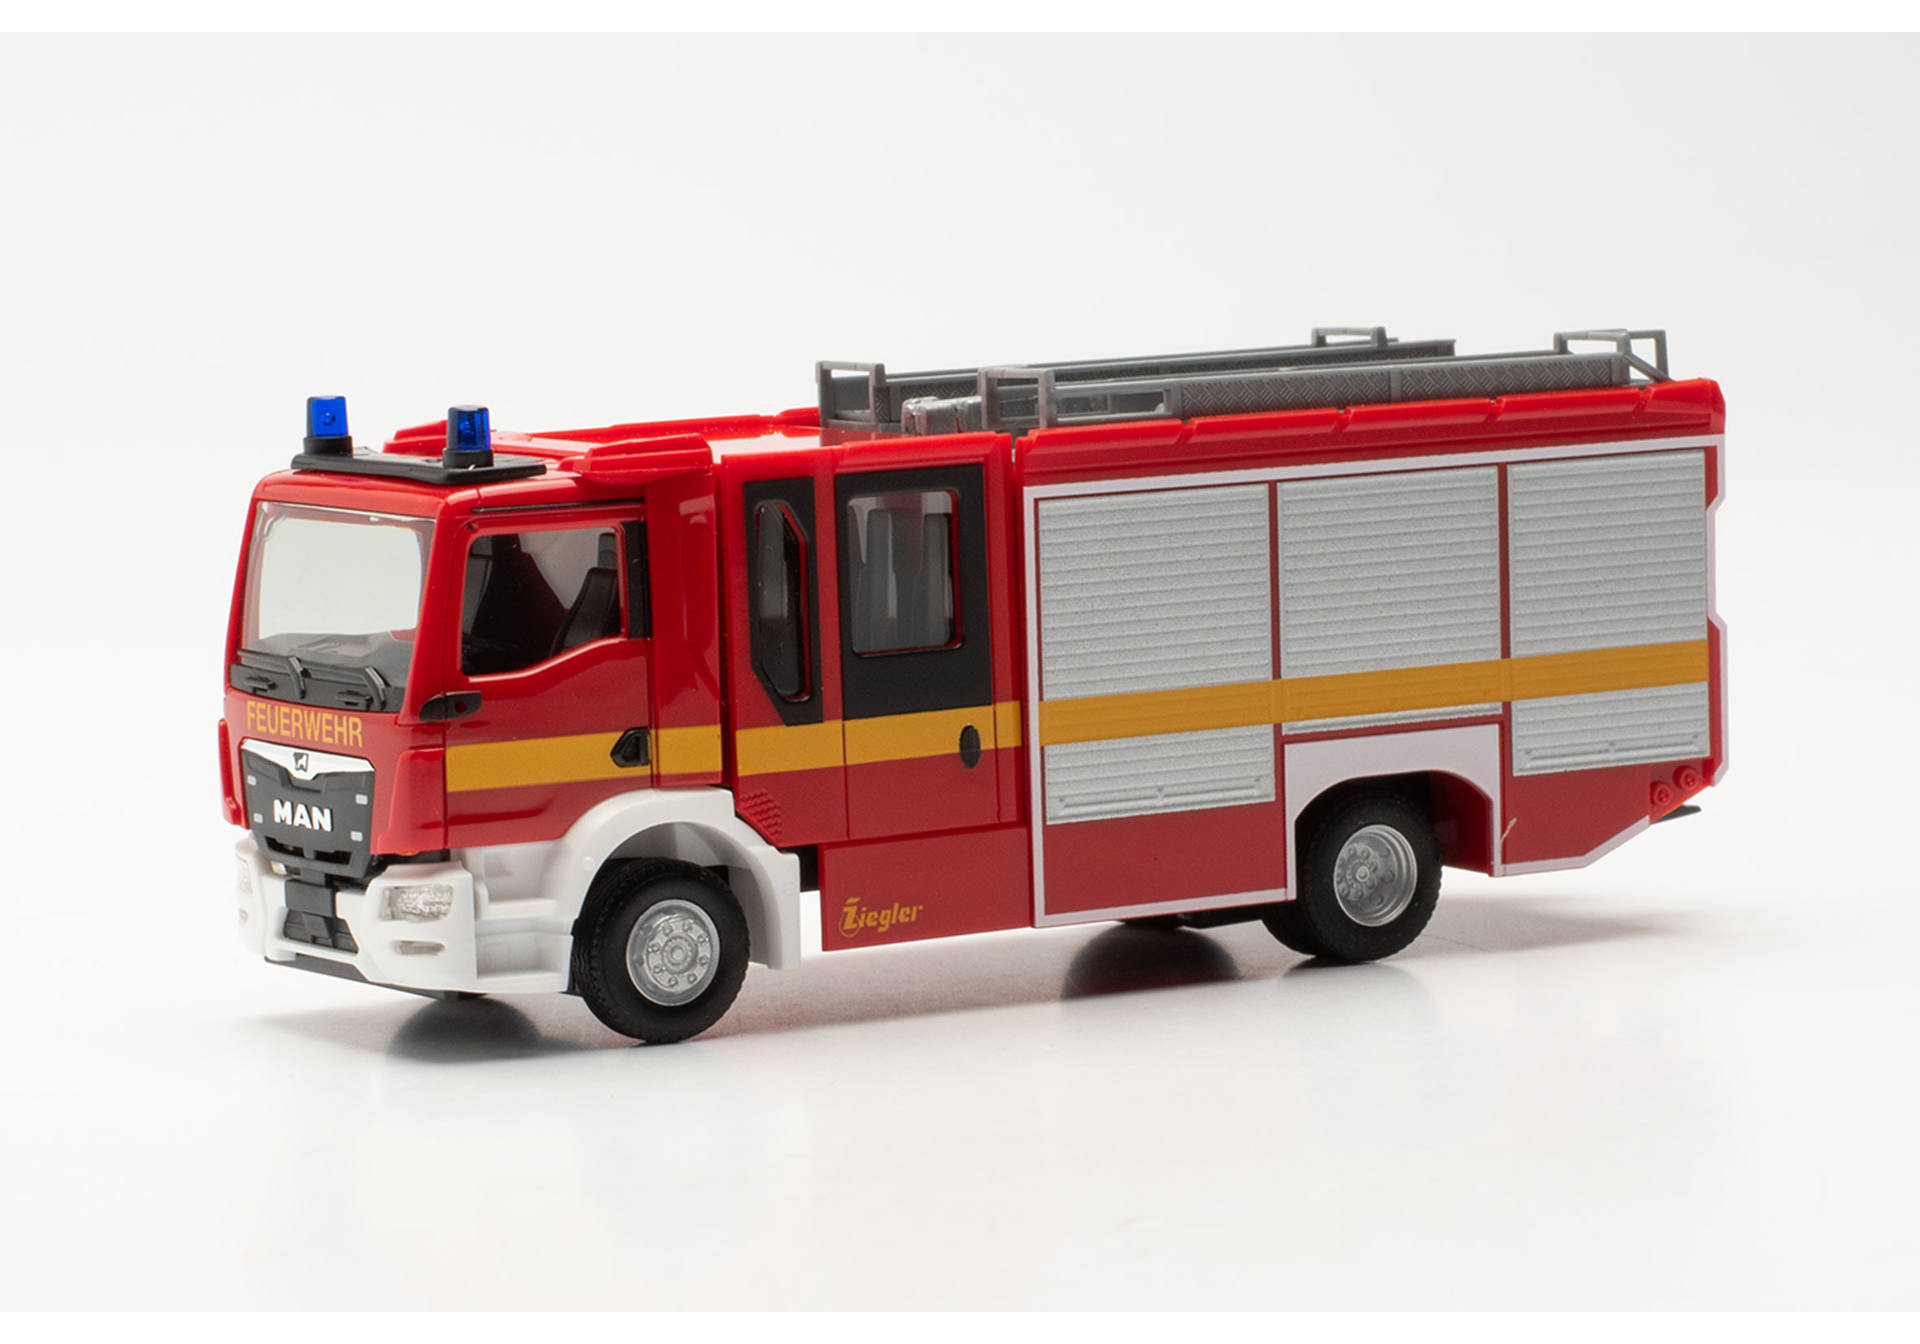 MAN TGM CC Ziegler-Z-Cab fire truck fire brigade